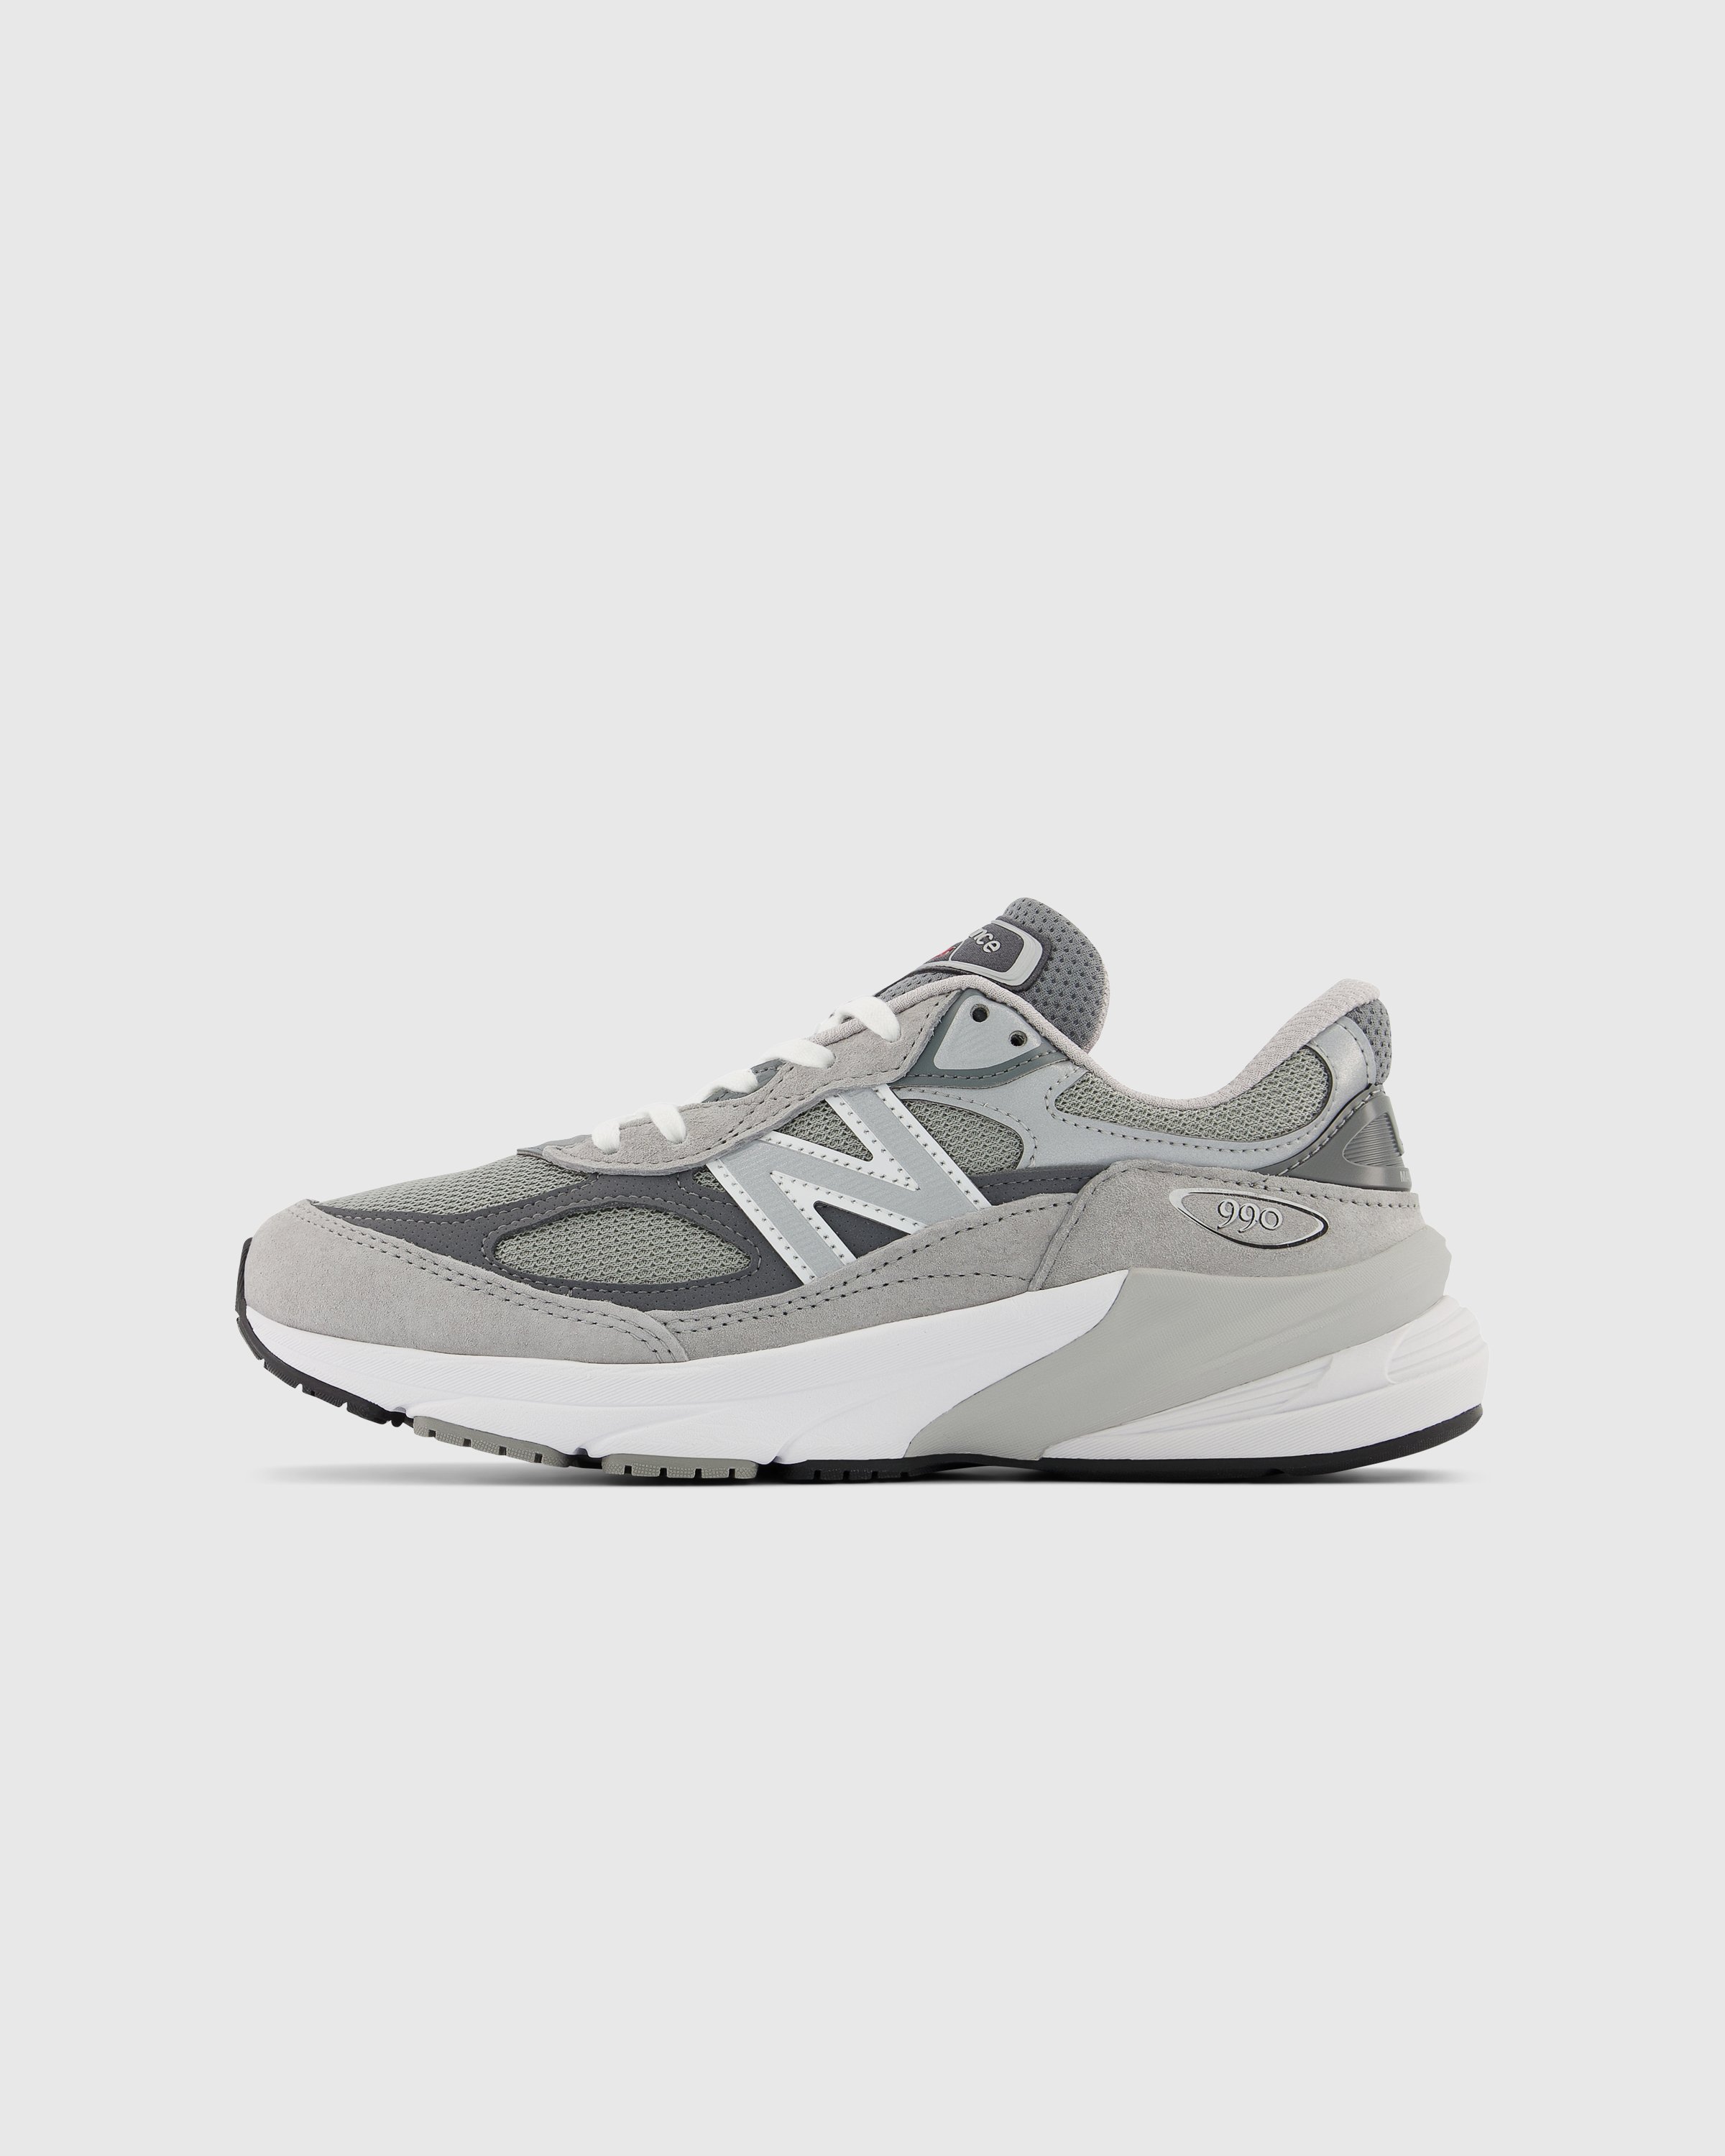 New Balance - W 990v6 Cool Gray - Footwear - Grey - Image 2